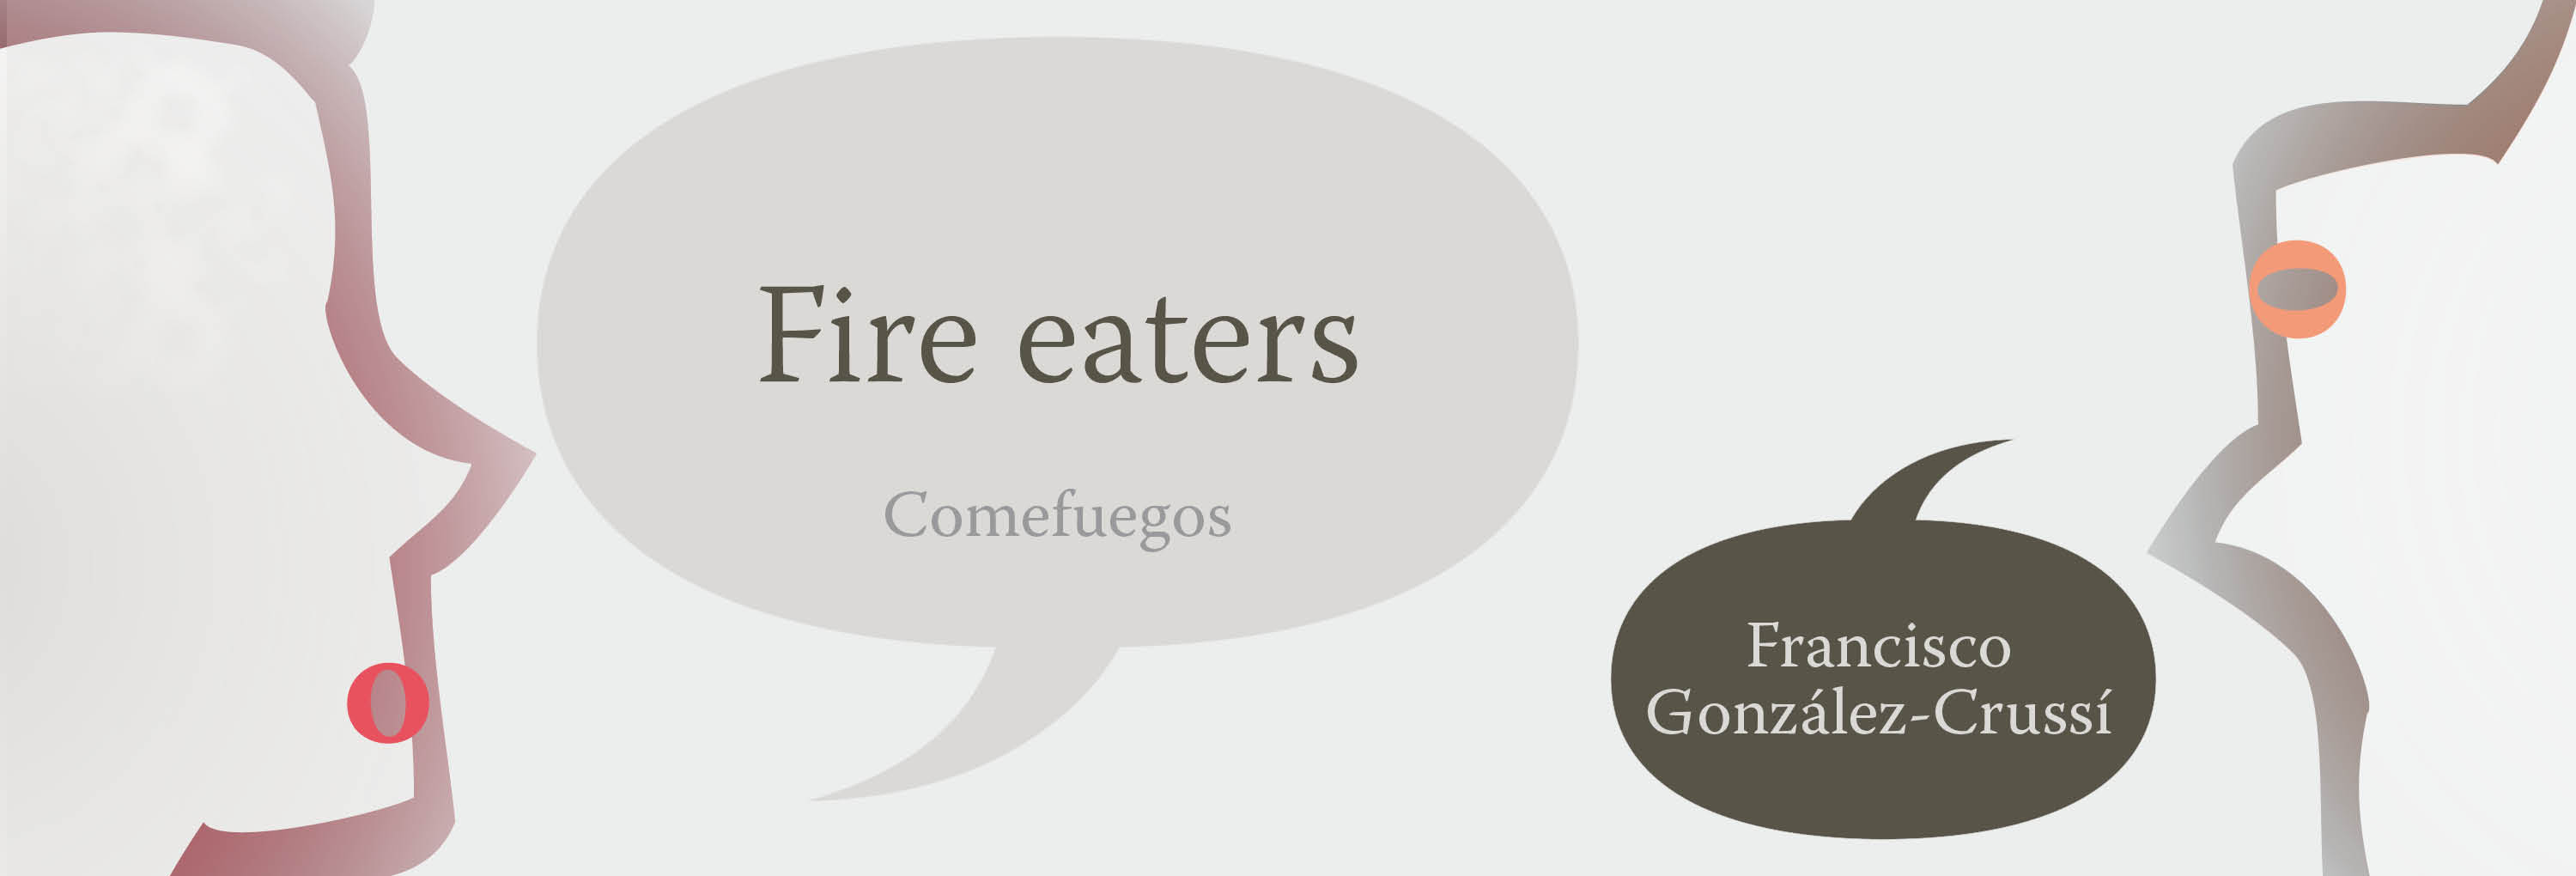 Banner del texto Fire eaters / Comefuegos de Francisco González-Crussí